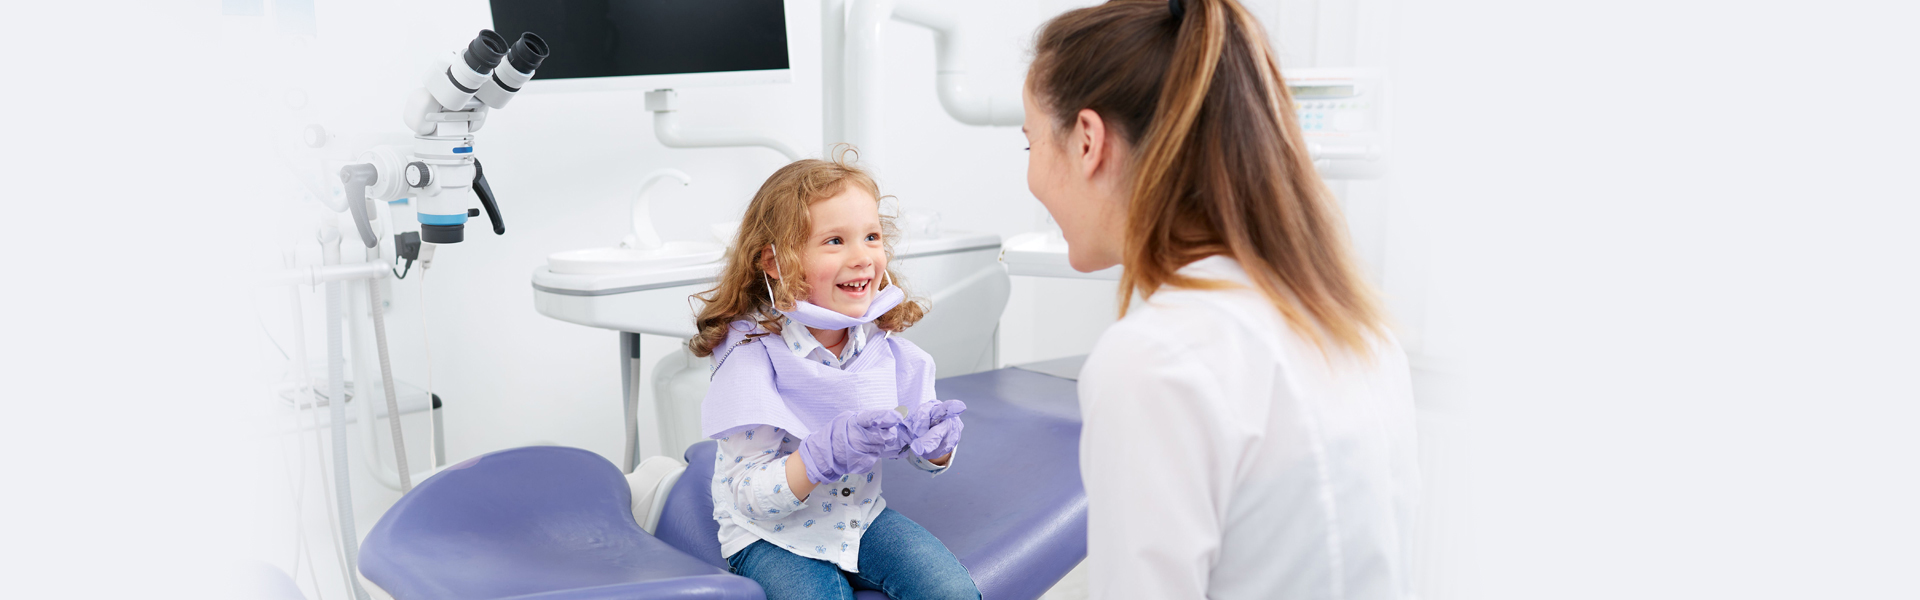 Importance of Preventive Dental Care for Children 